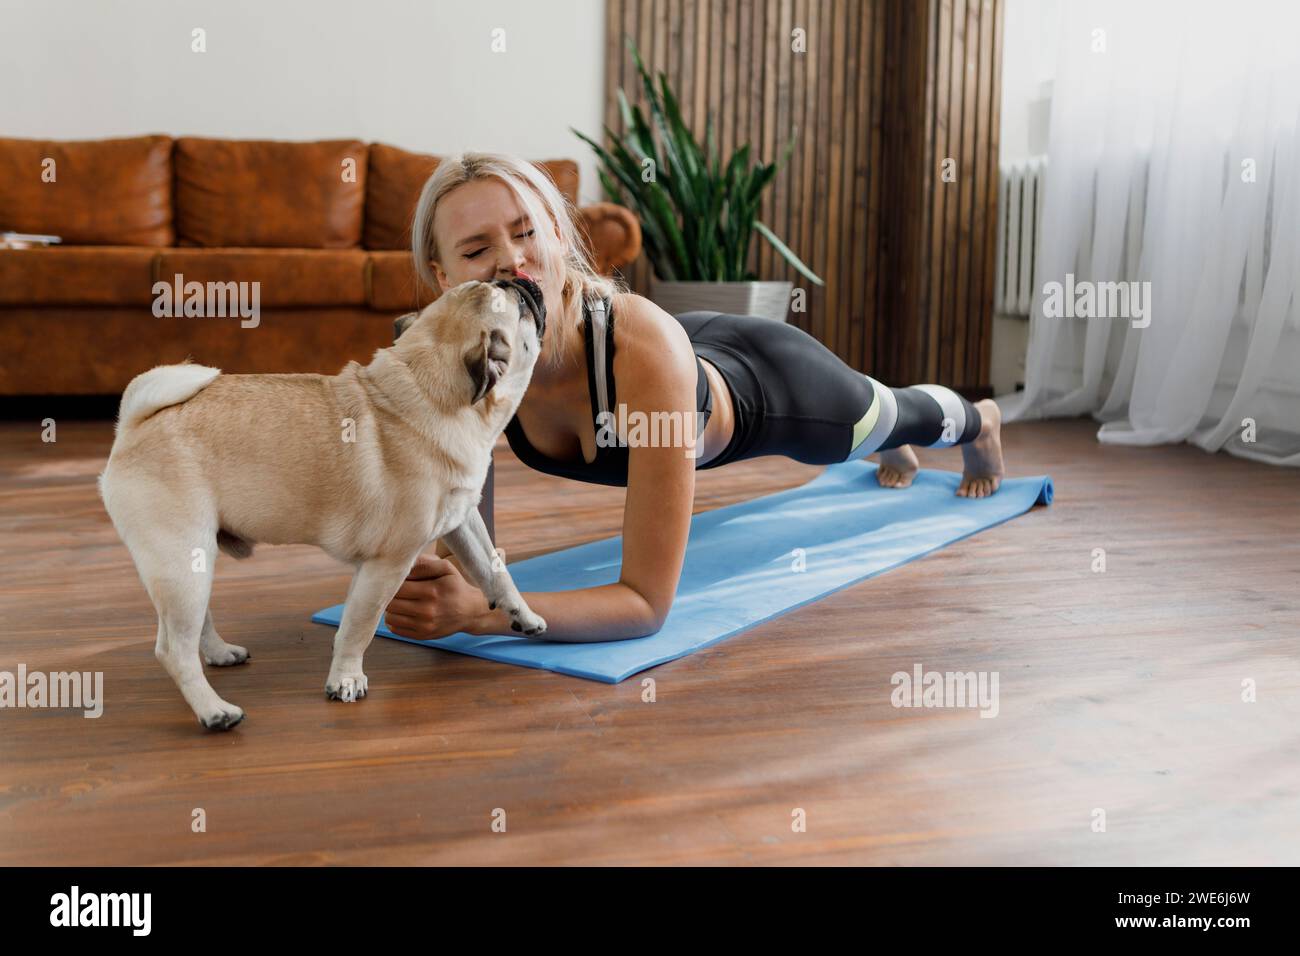 Young woman exercising near playful Pug dog at home Stock Photo